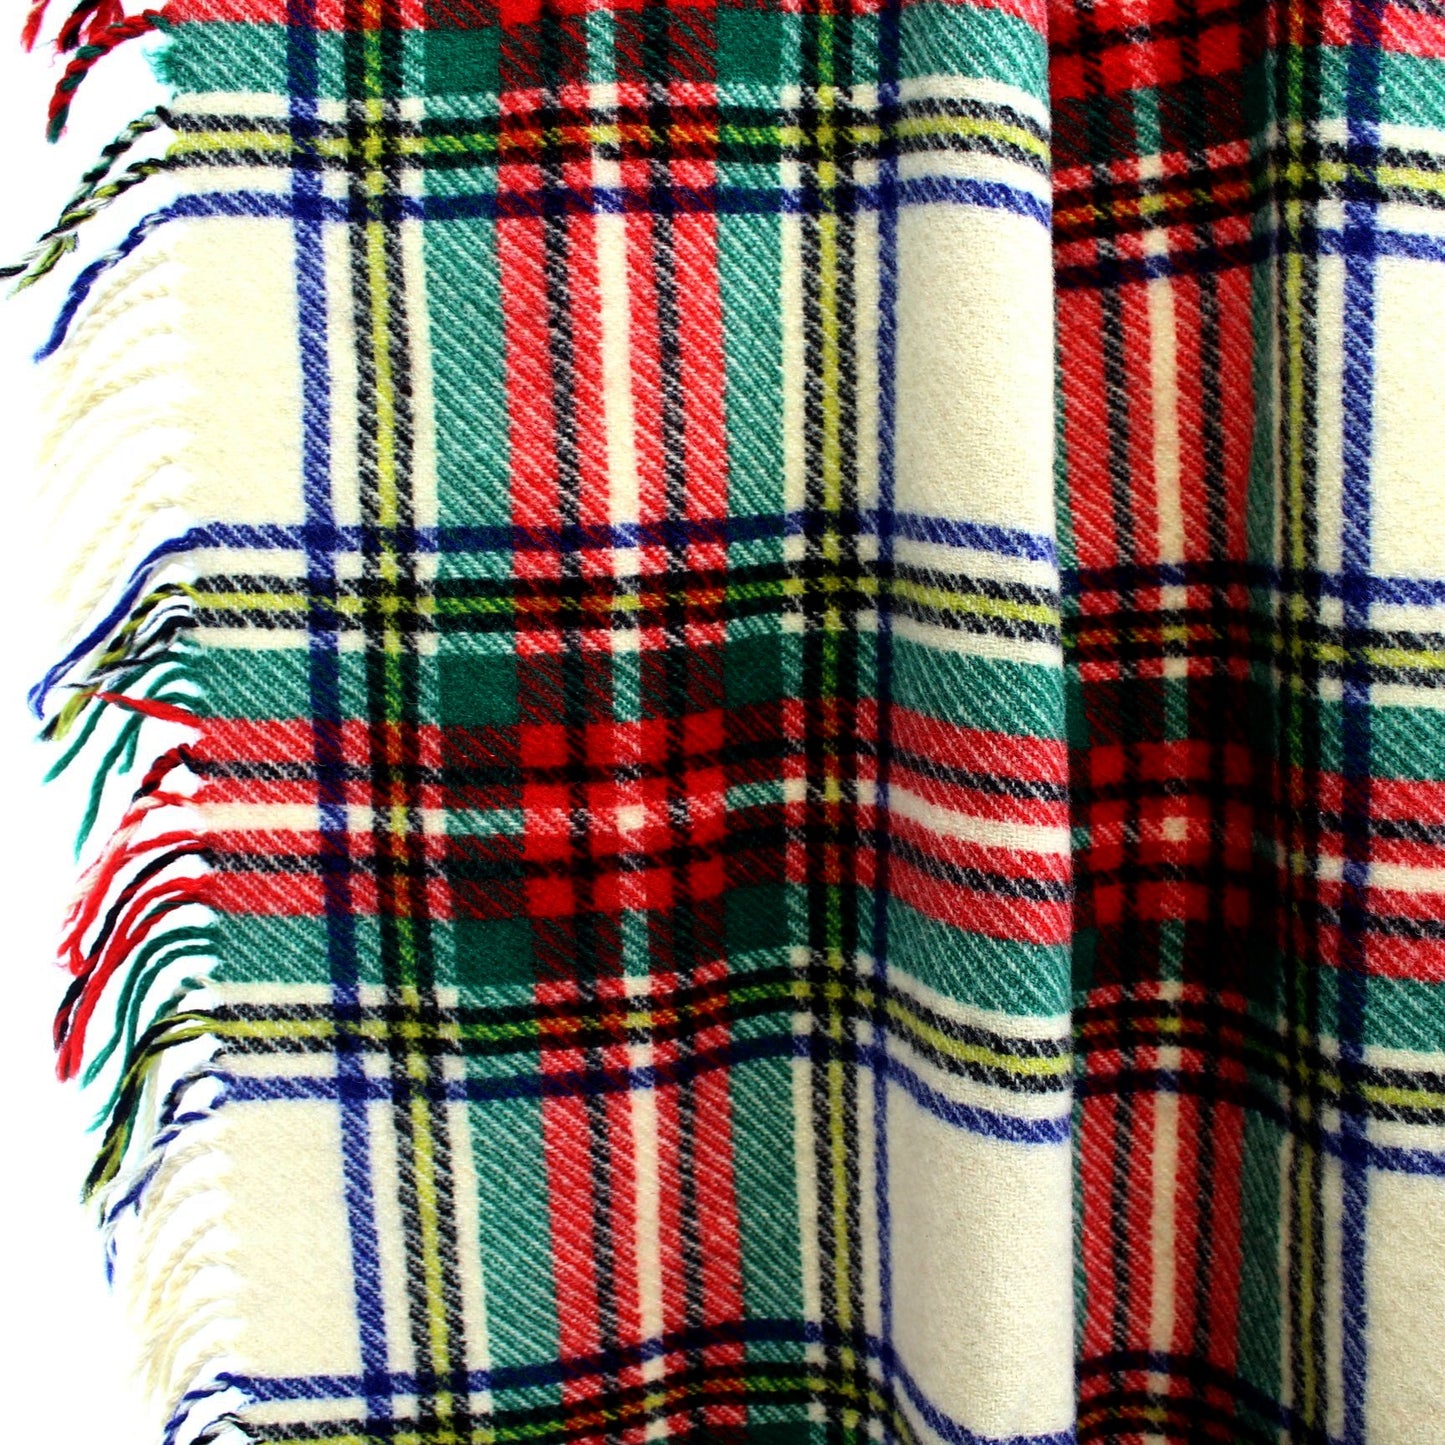 Connemara Rug Throw Blanket Classic Plaid Foxford Ireland closeup of plaid design